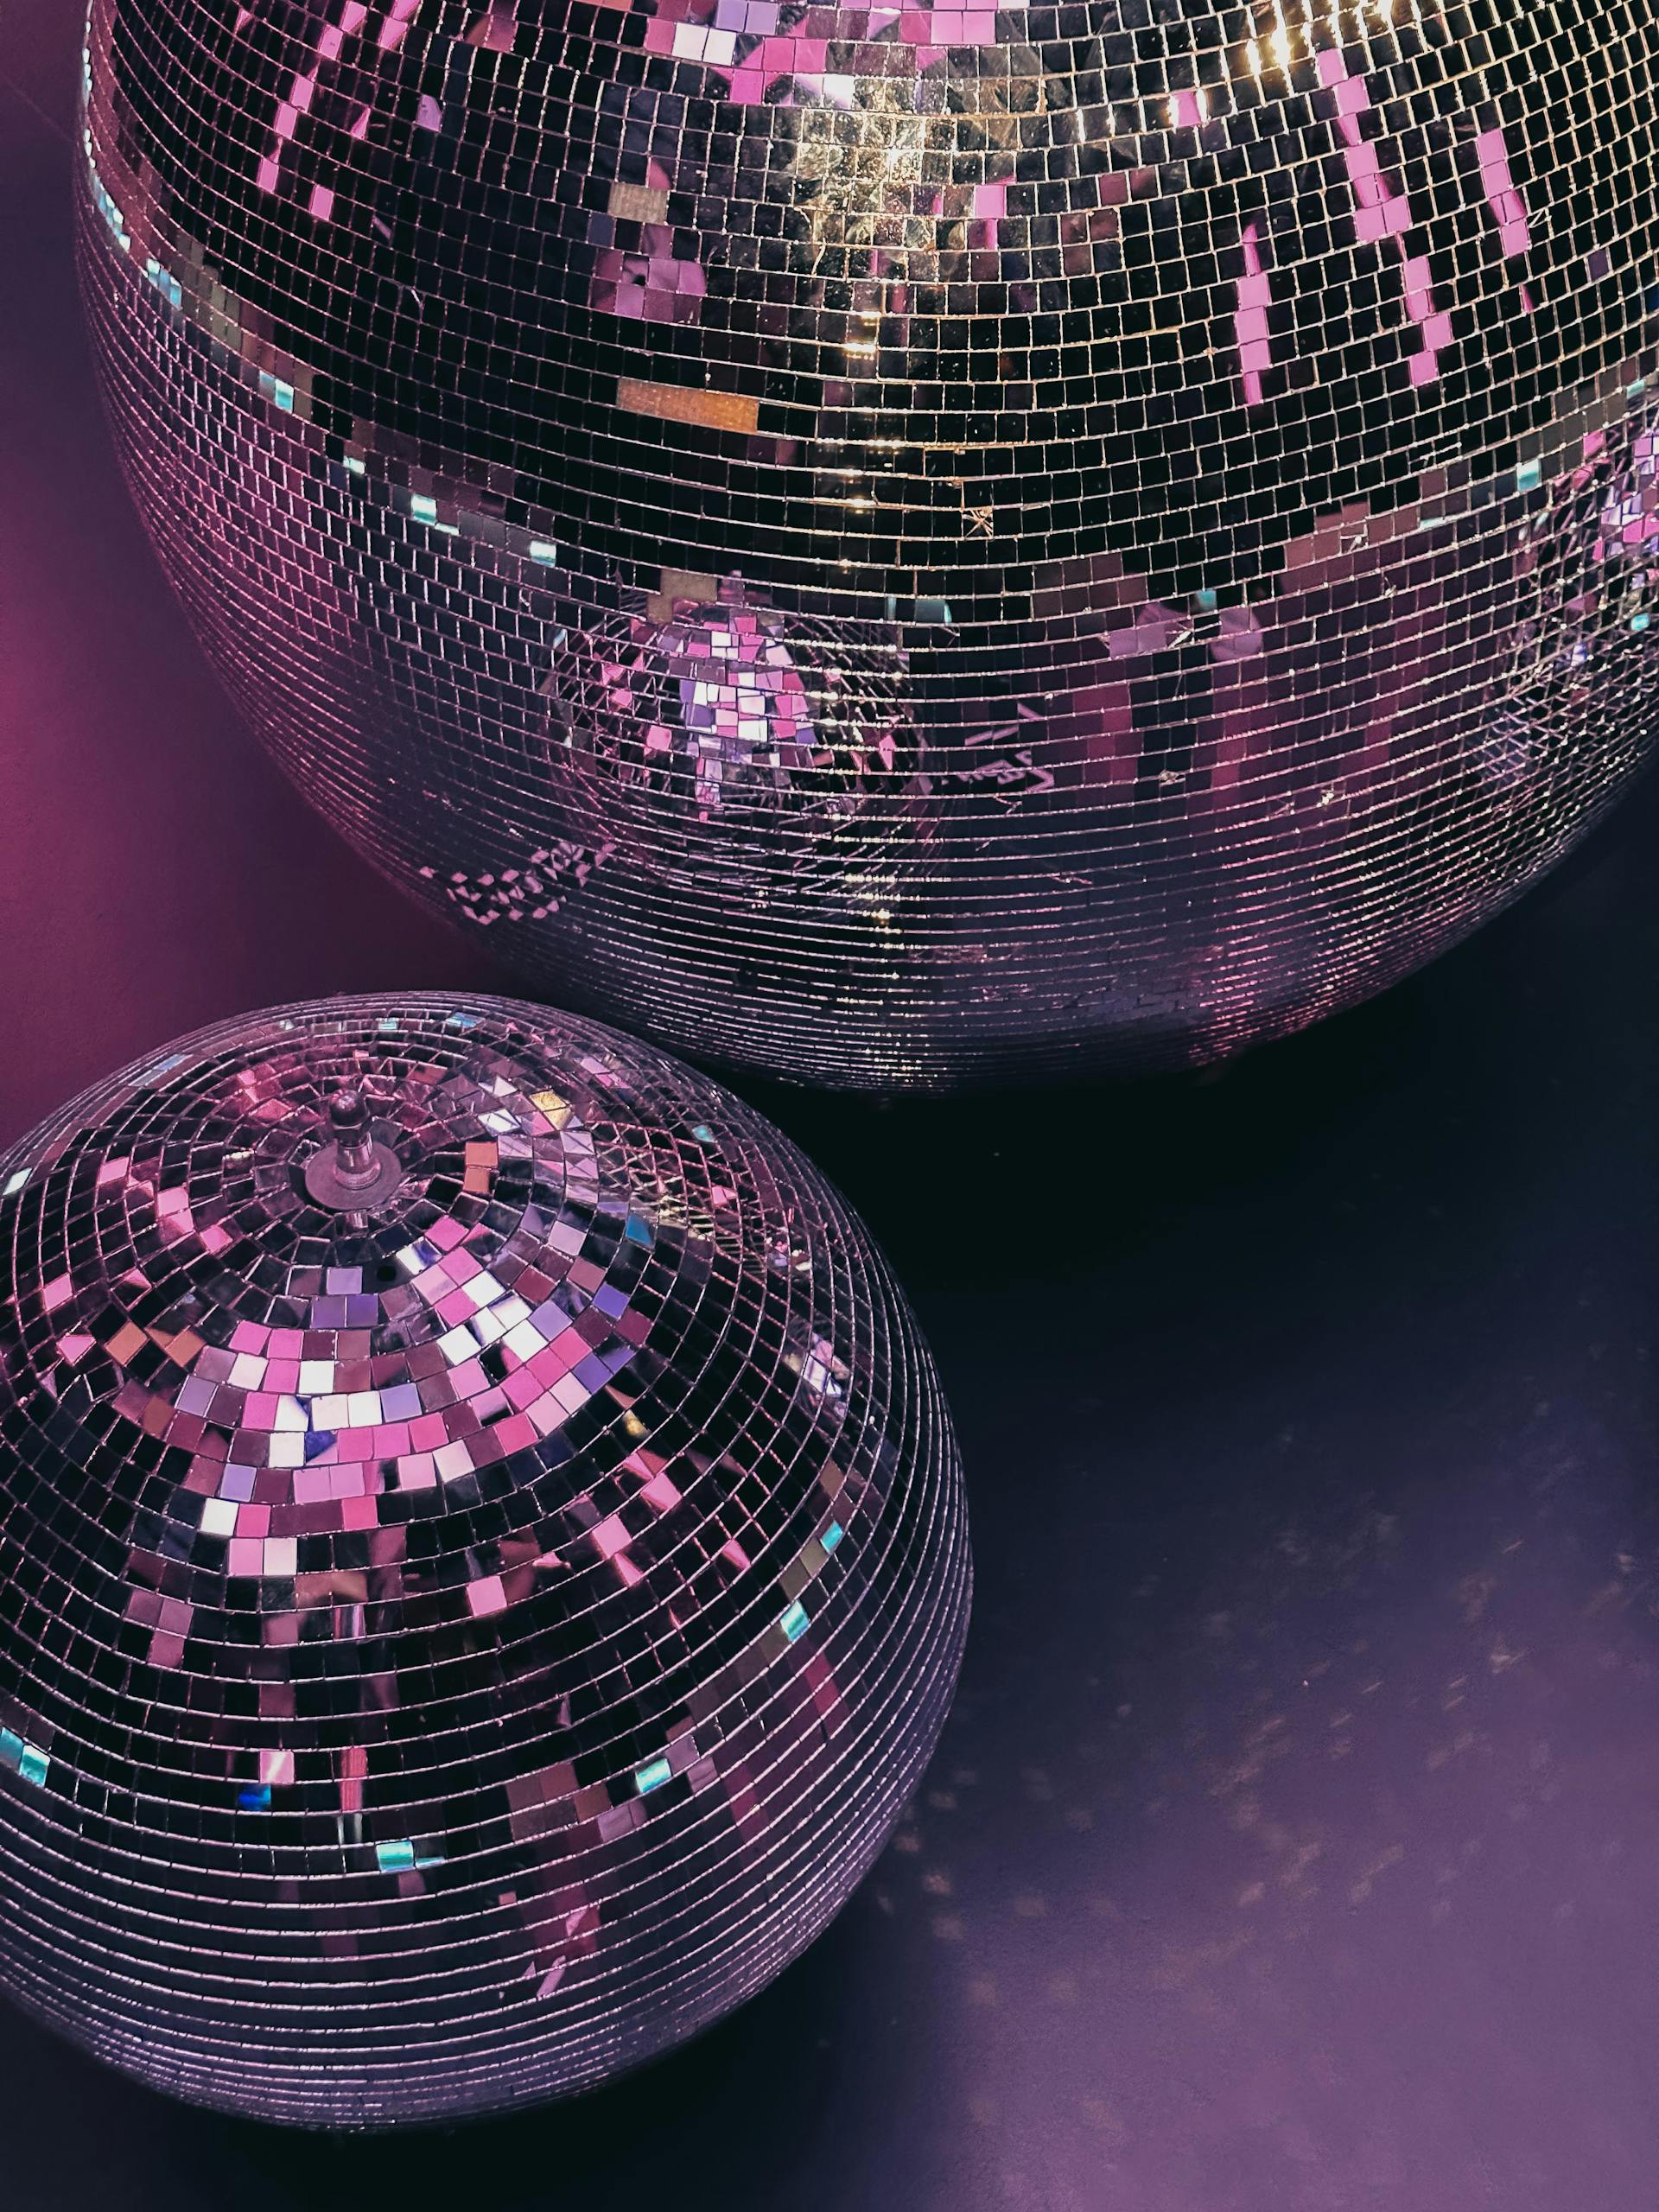 Primer plano de bolas de discoteca con iluminación púrpura | Fuente: Pexels